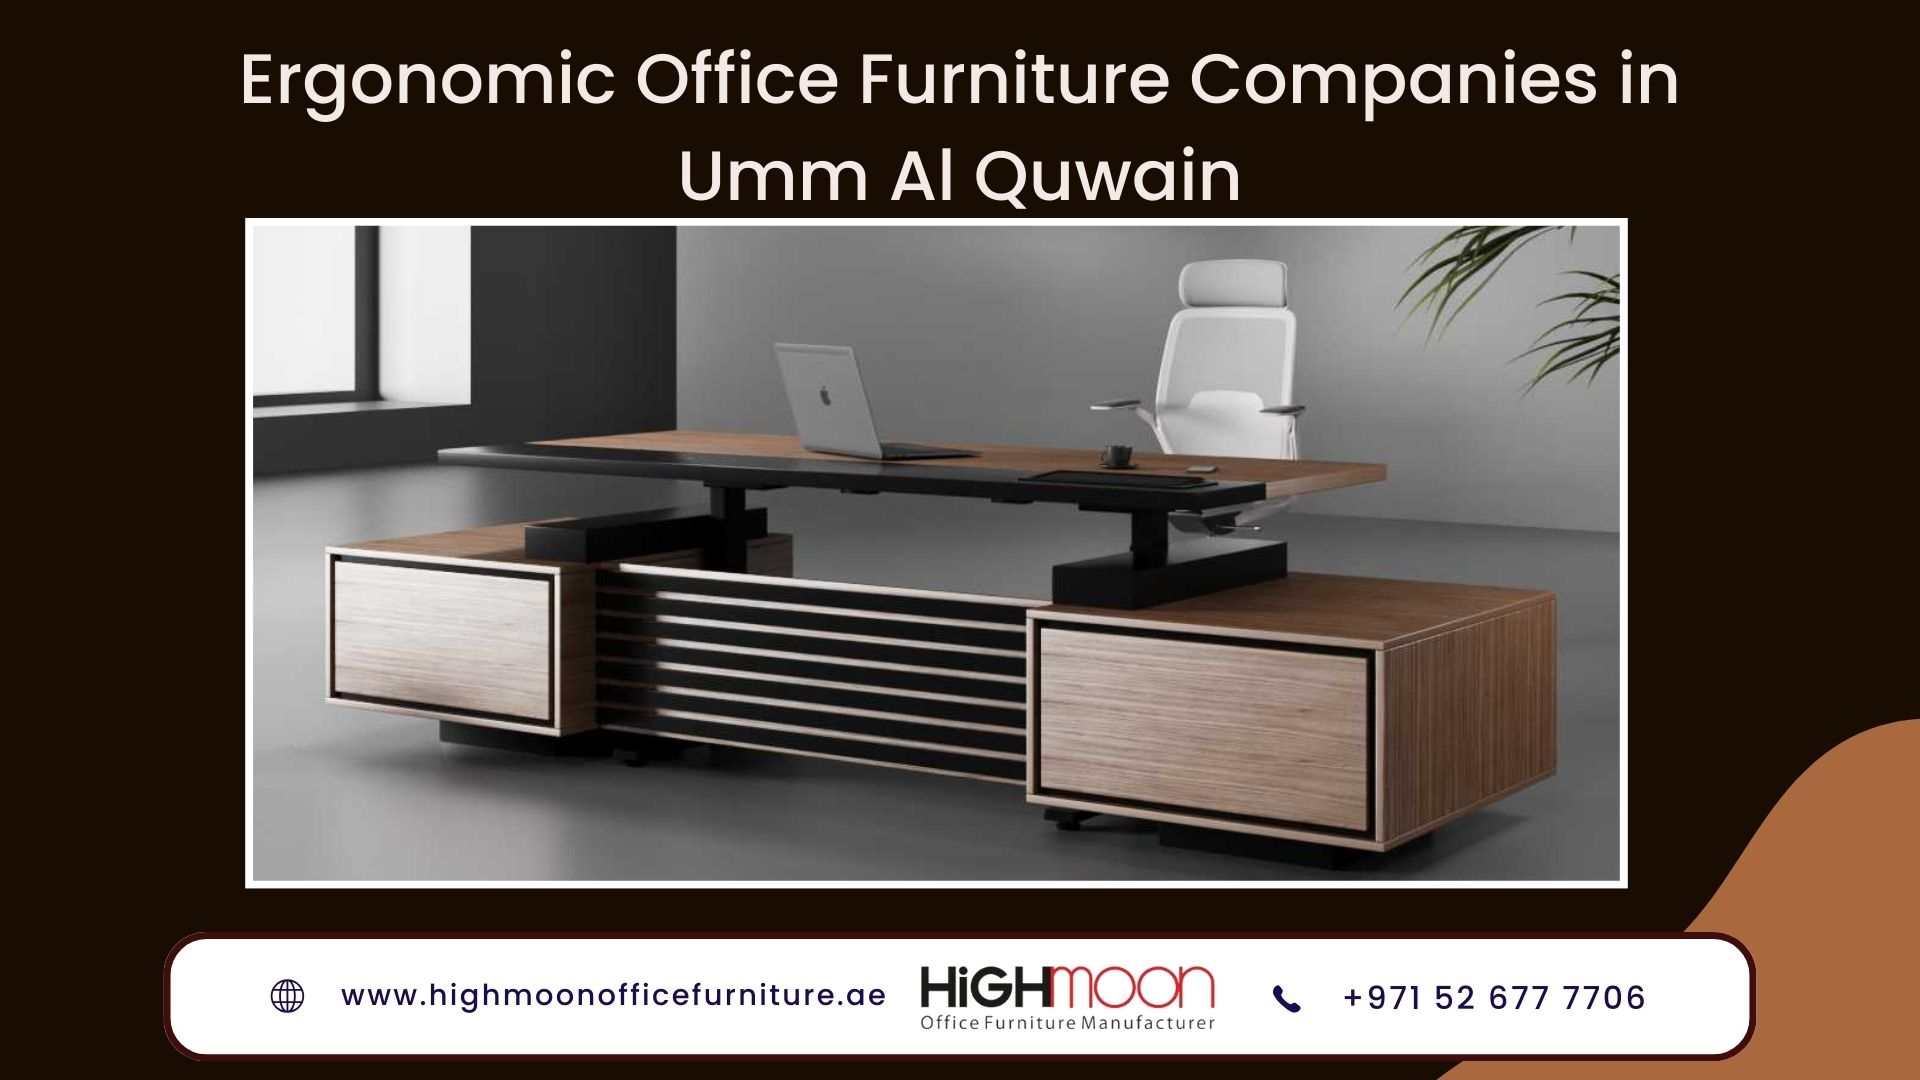 Ergonomic Office Furniture Companies in Umm Al Quwain